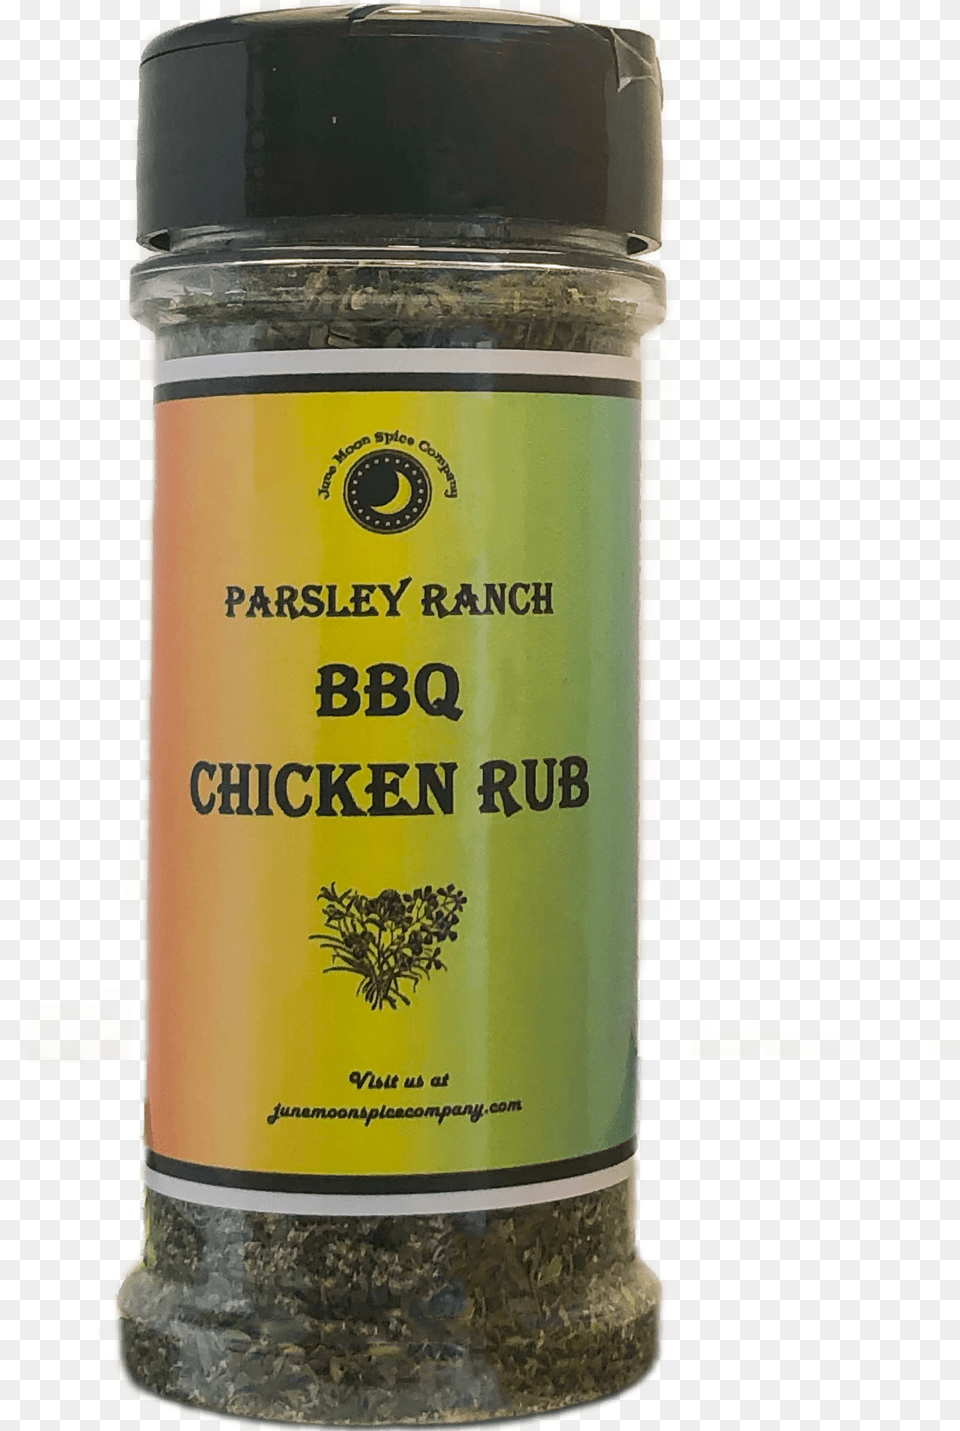 Parsley Ranch Bbq Chicken Rub Pic 6th Grade, Can, Tin, Food Png Image